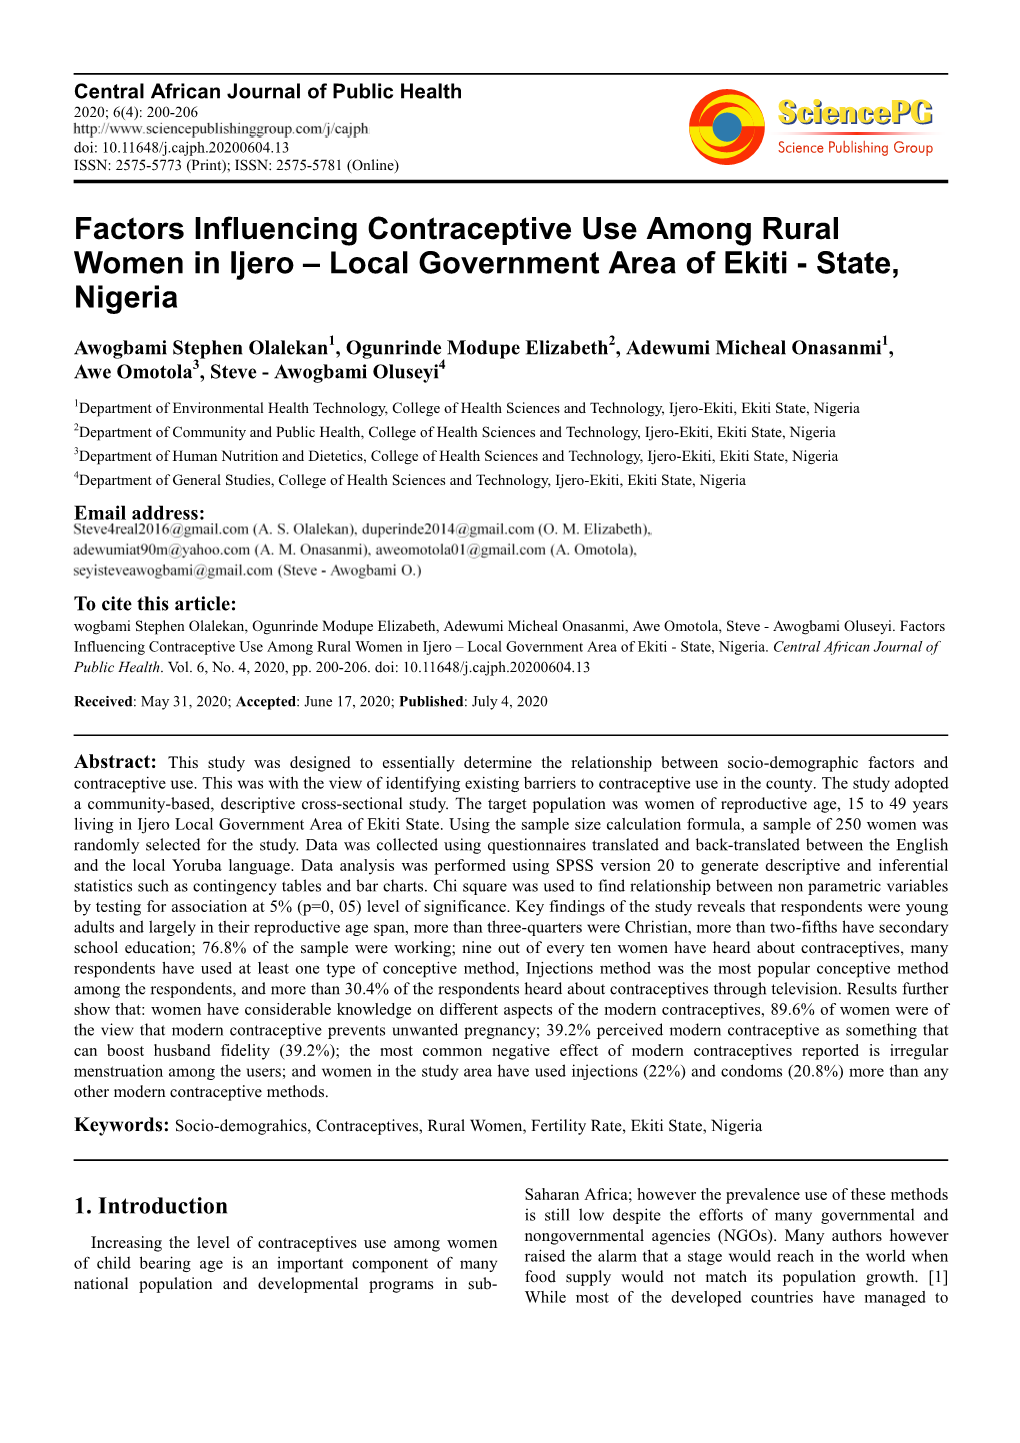 Factors Influencing Contraceptive Use Among Rural Women in Ijero – Local Government Area of Ekiti - State, Nigeria